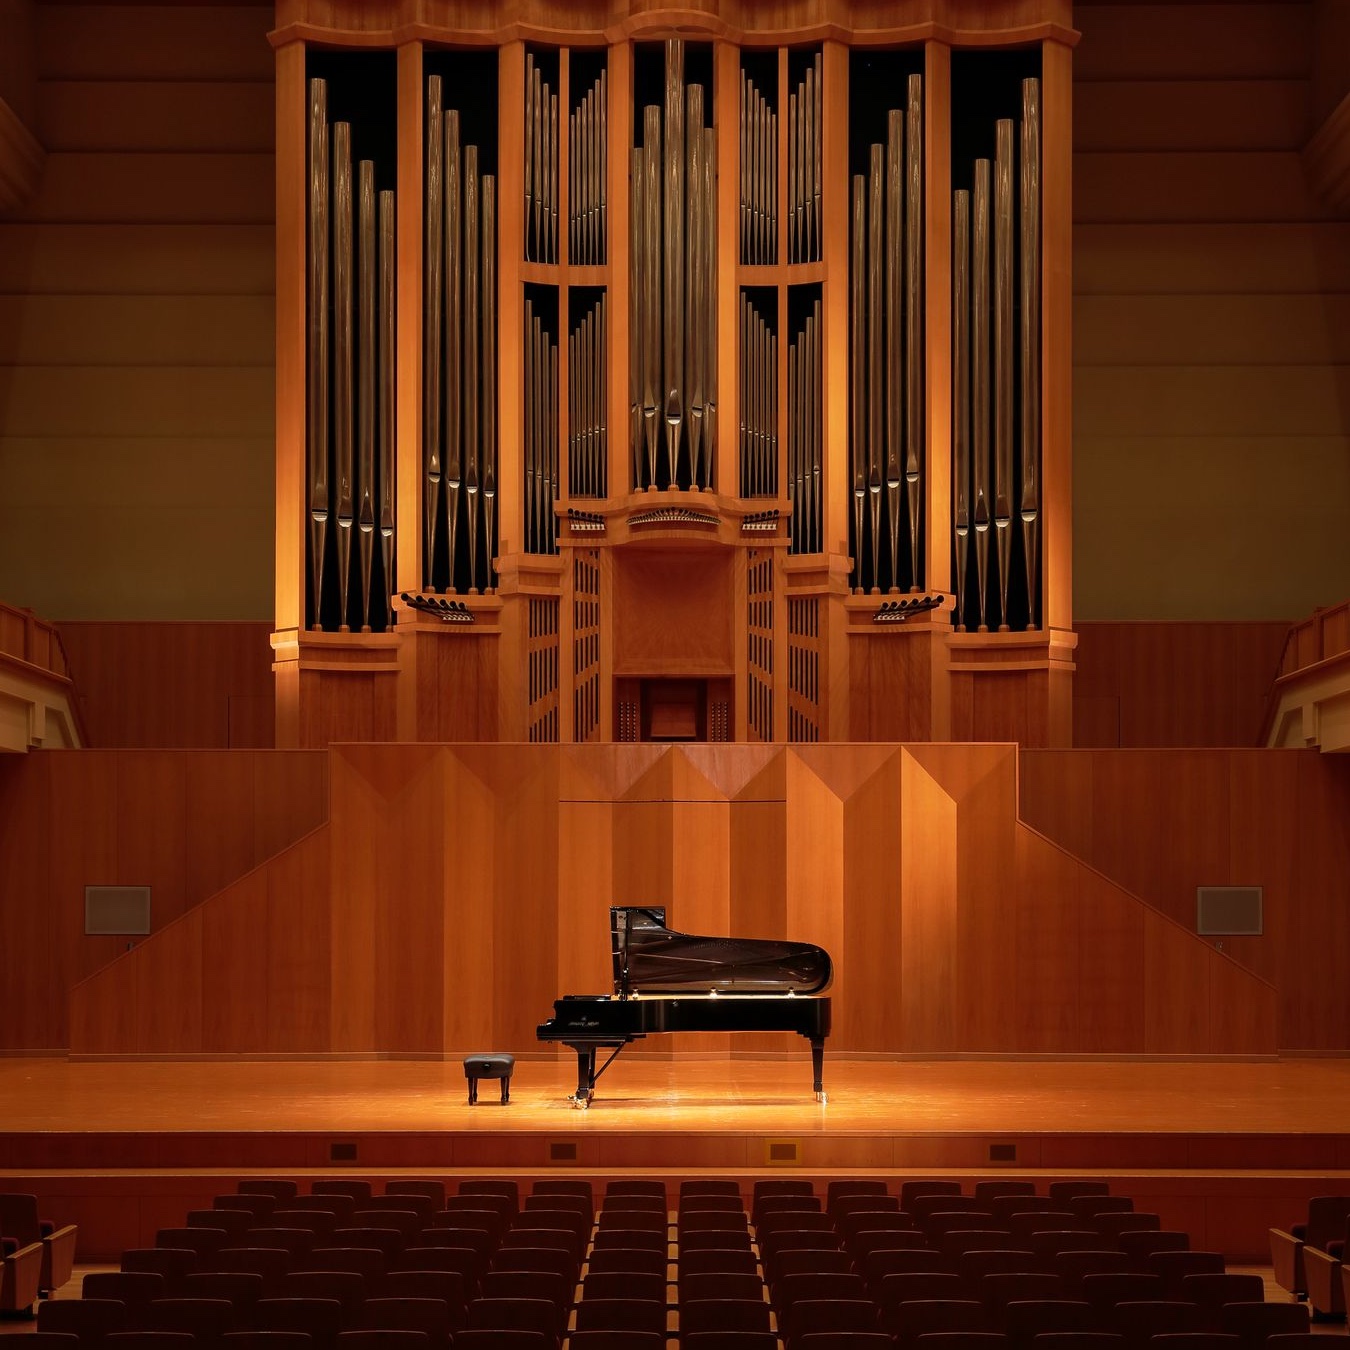 Shigeru Kawai Concert Grand in a Concert Hall